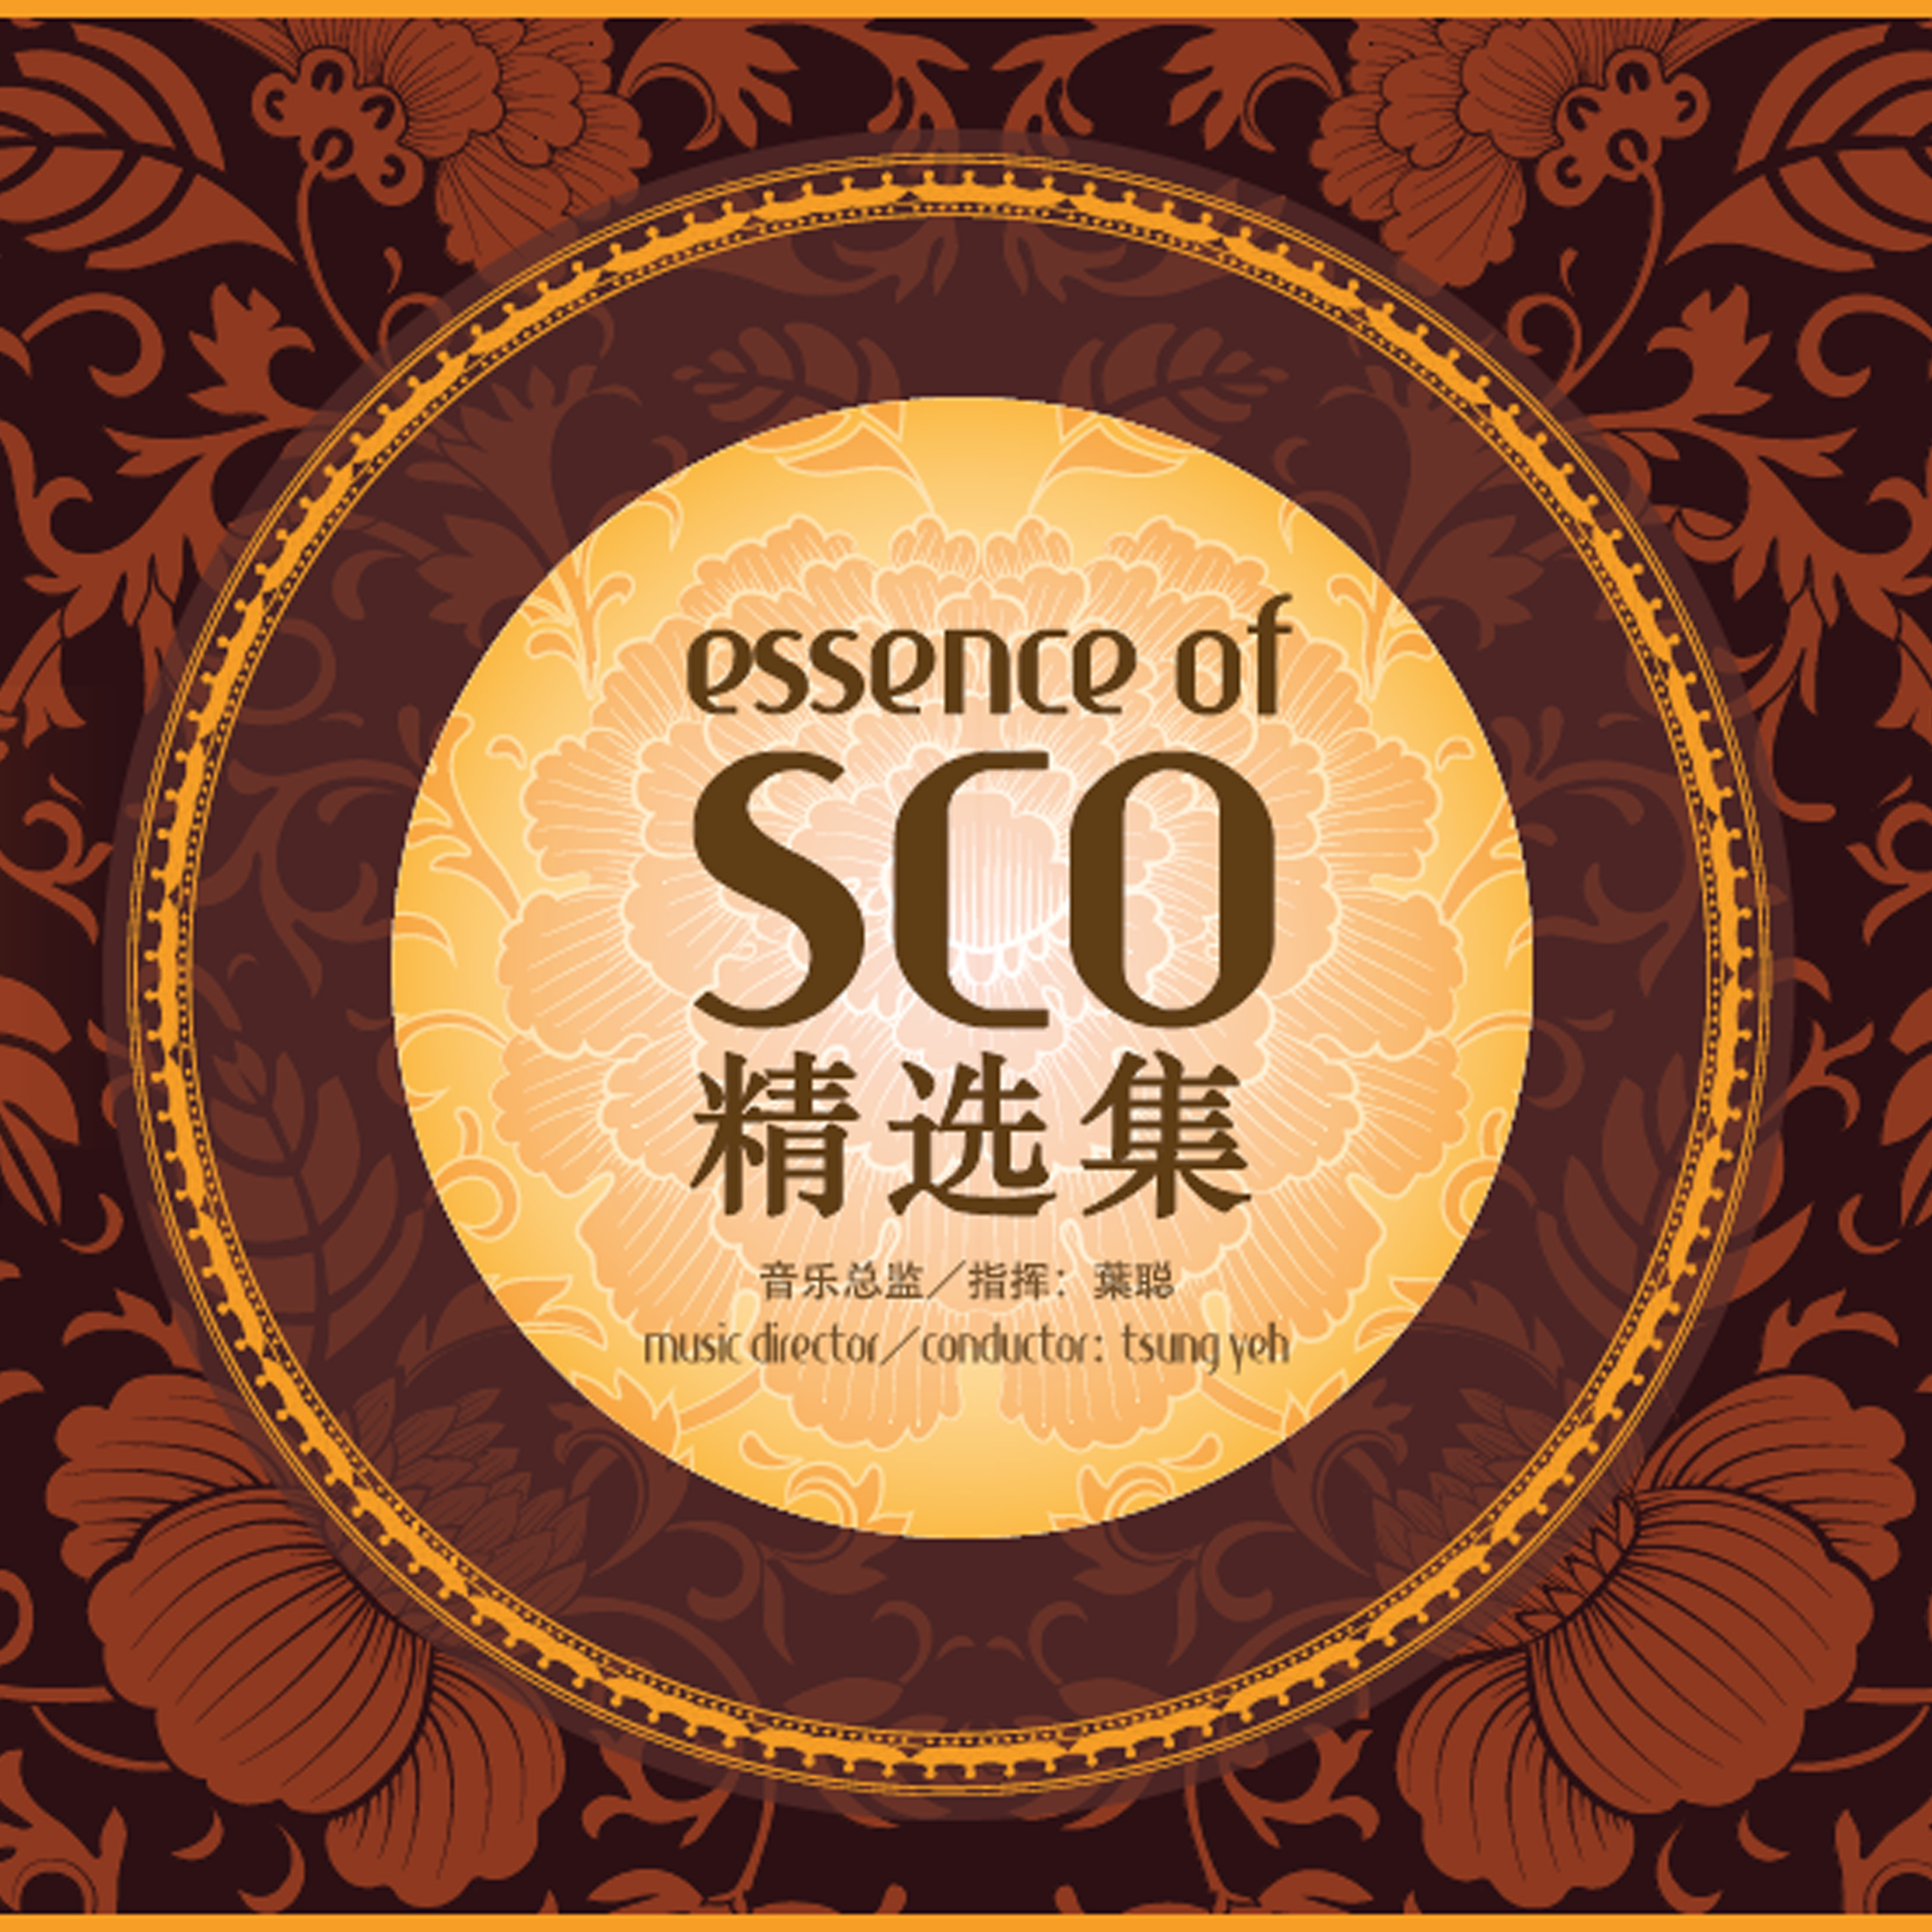 essence-of-sco-n Essence of SCO